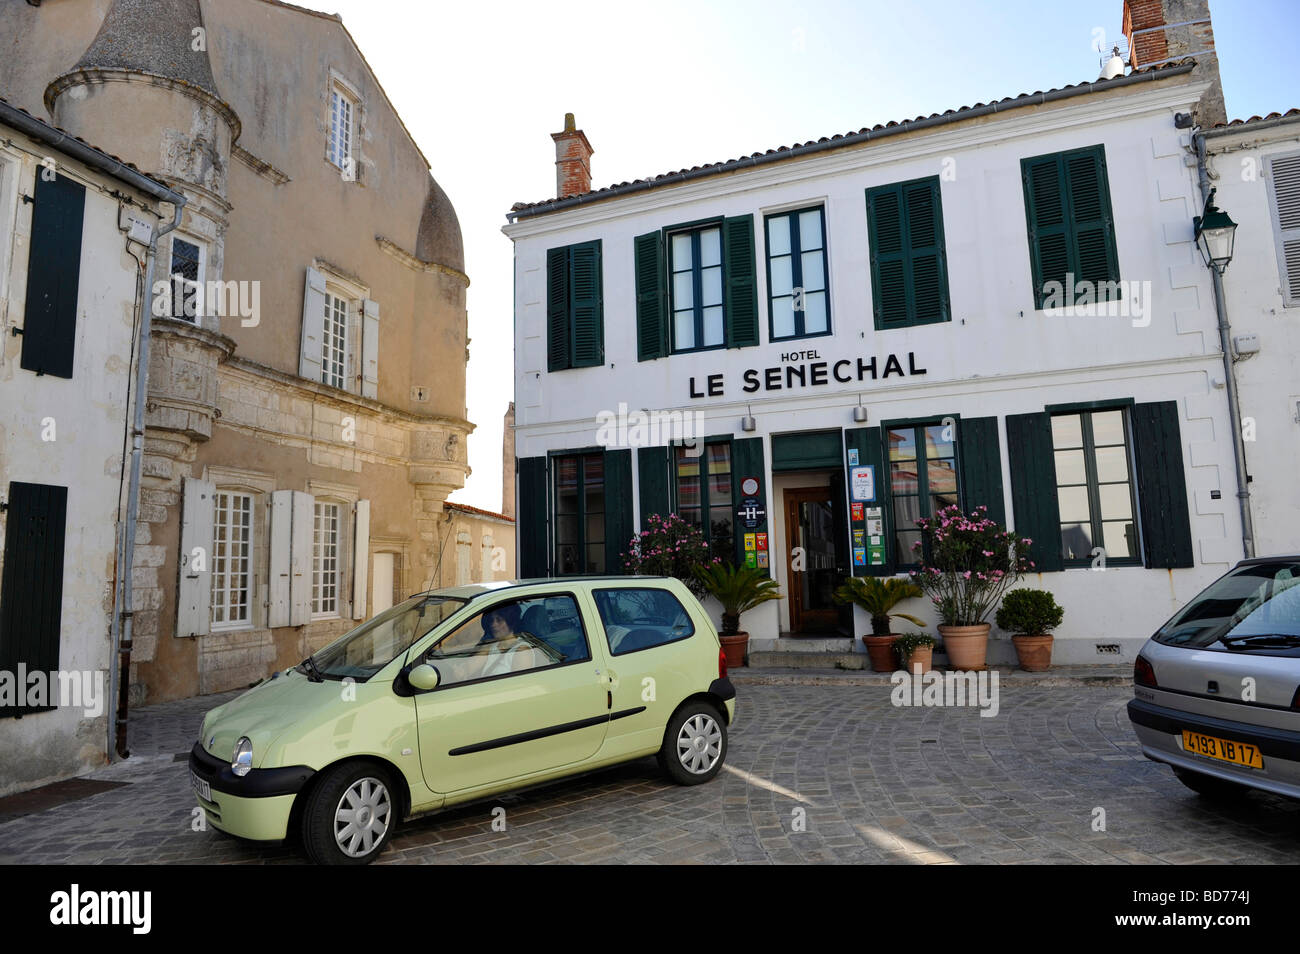 Ars en Re Hotel Le Senechal persiane verdi auto Foto Stock